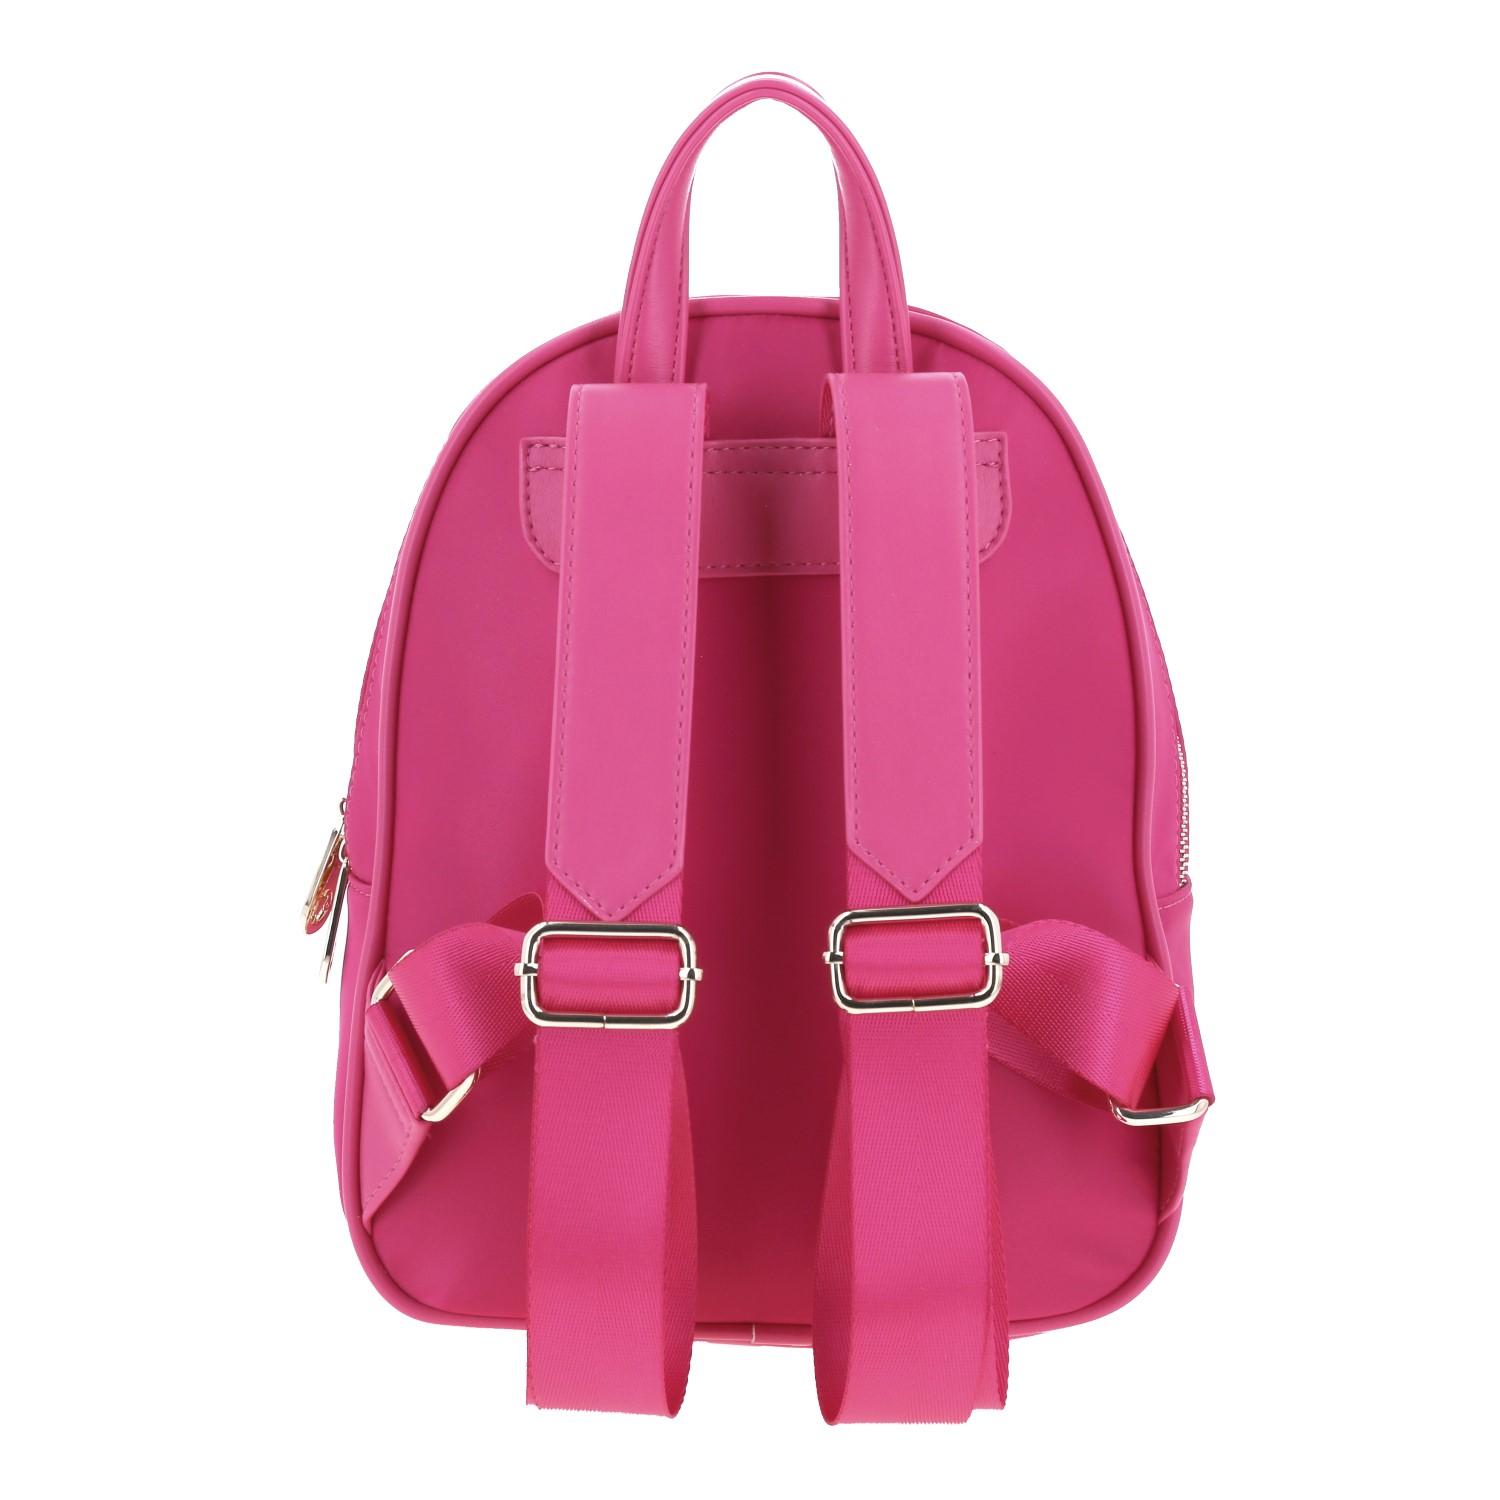 Backpack Barbie by Gorett Rosa Ariadna